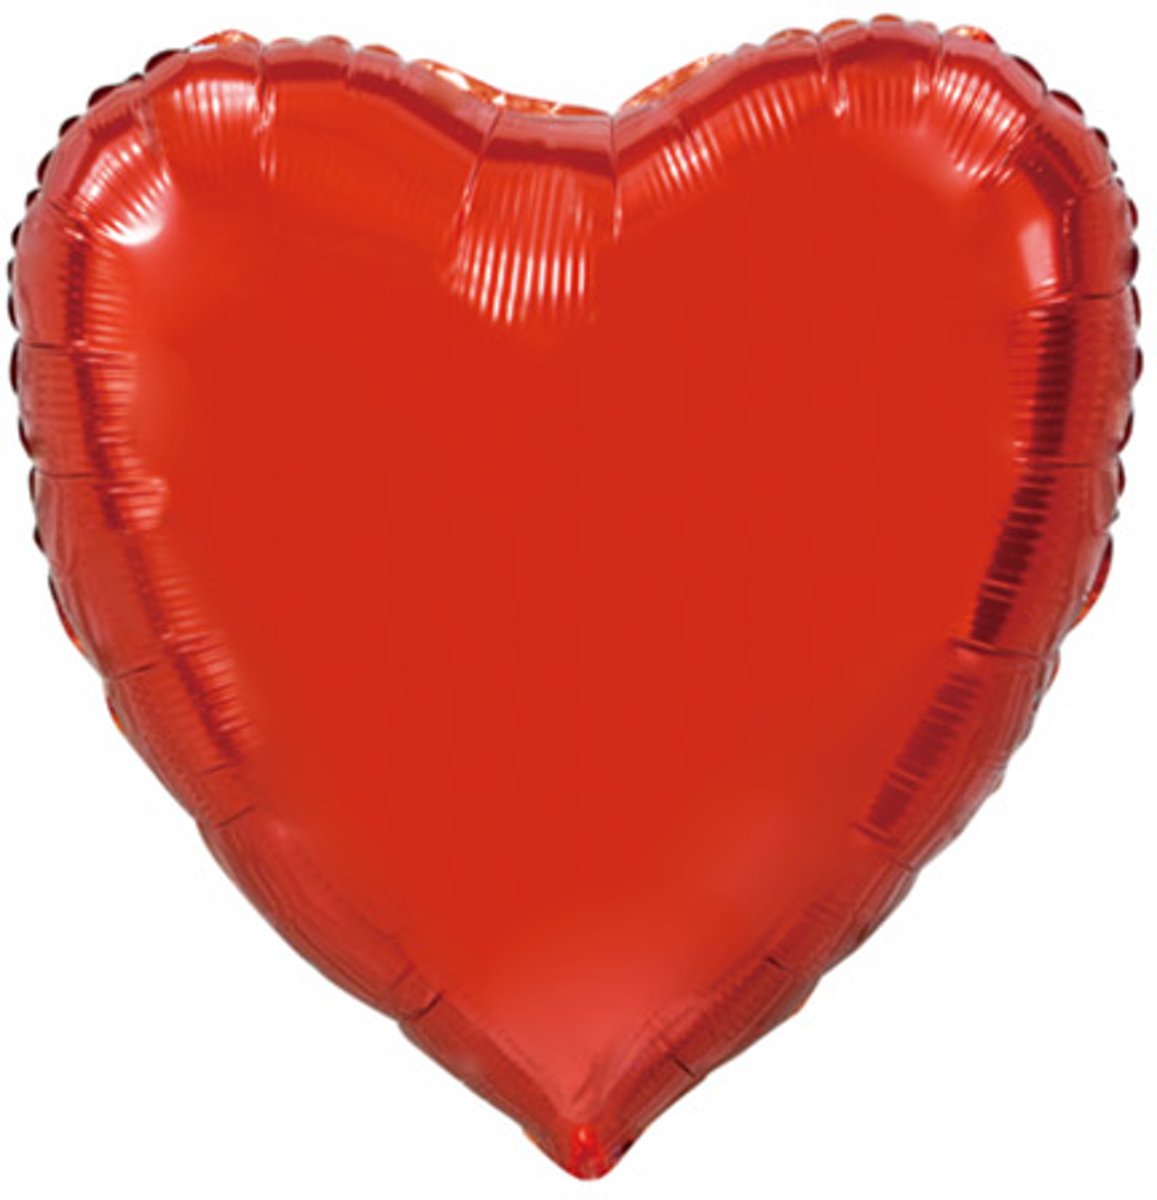 Folie ballon hart vorm rood 92 cm groot